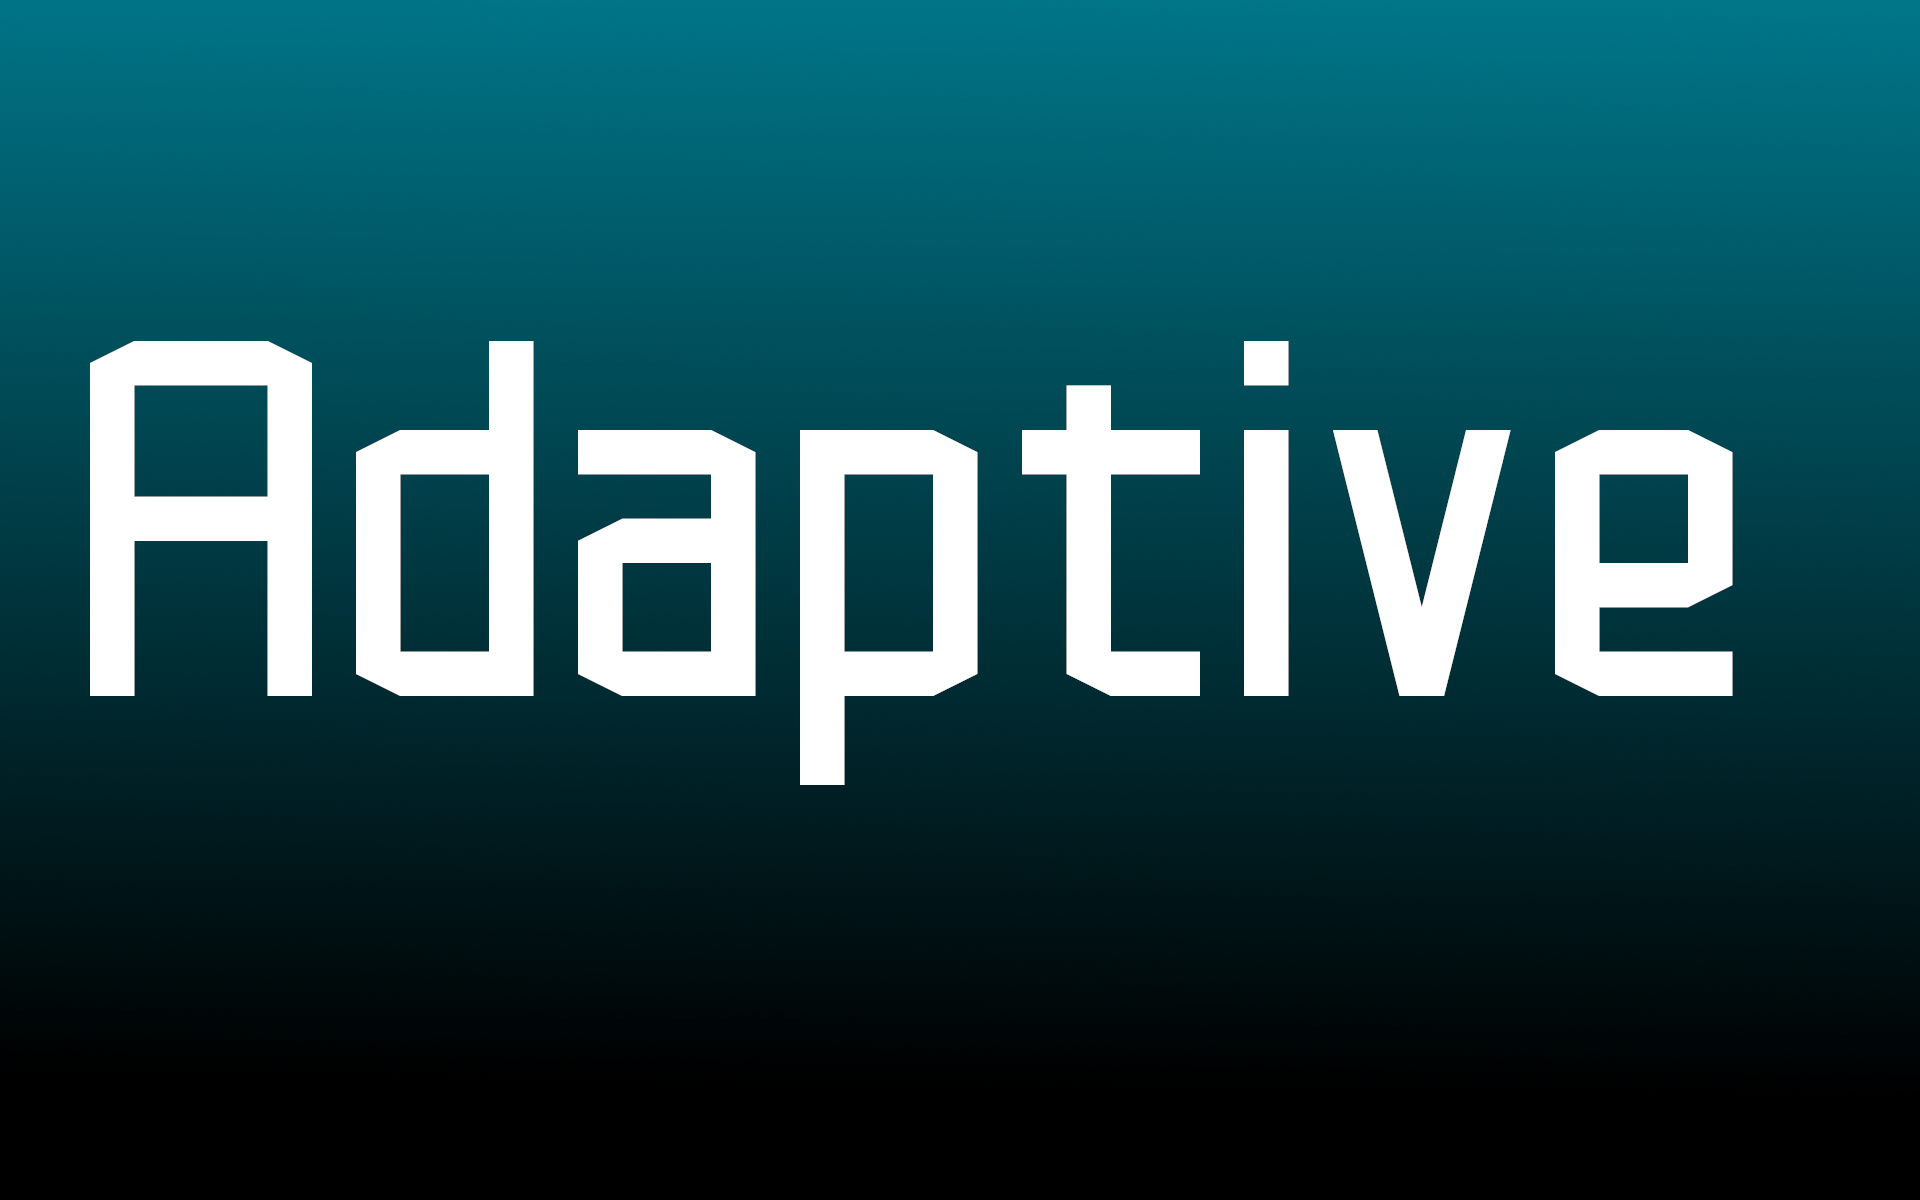 The Title "Adaptive"